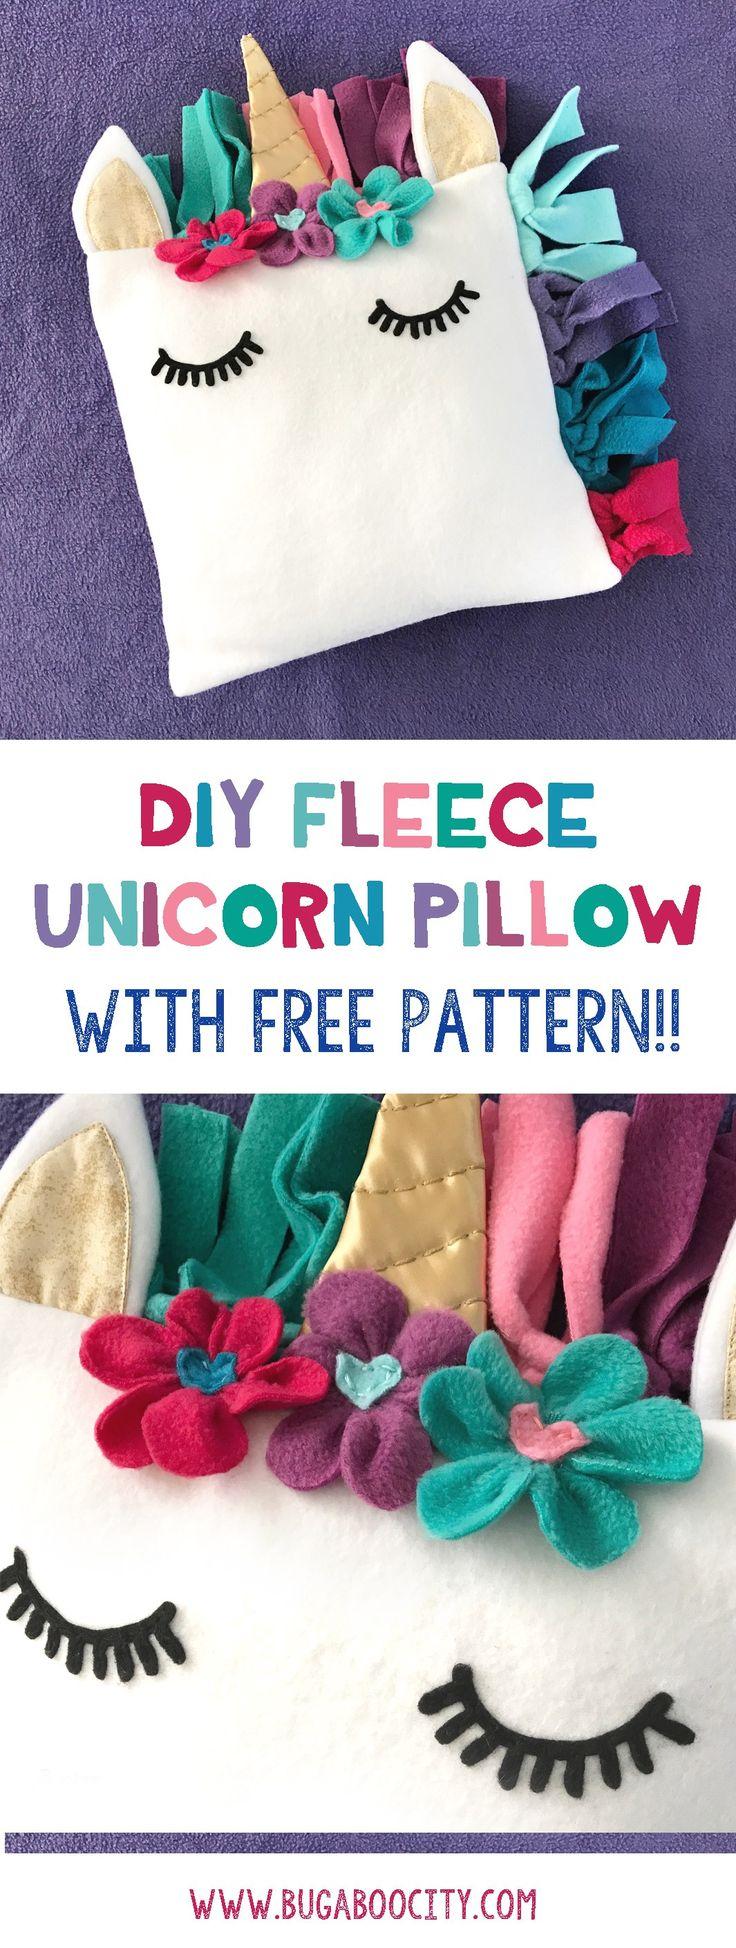 زفاف - DIY Fleece Unicorn Pillow With Free Pattern